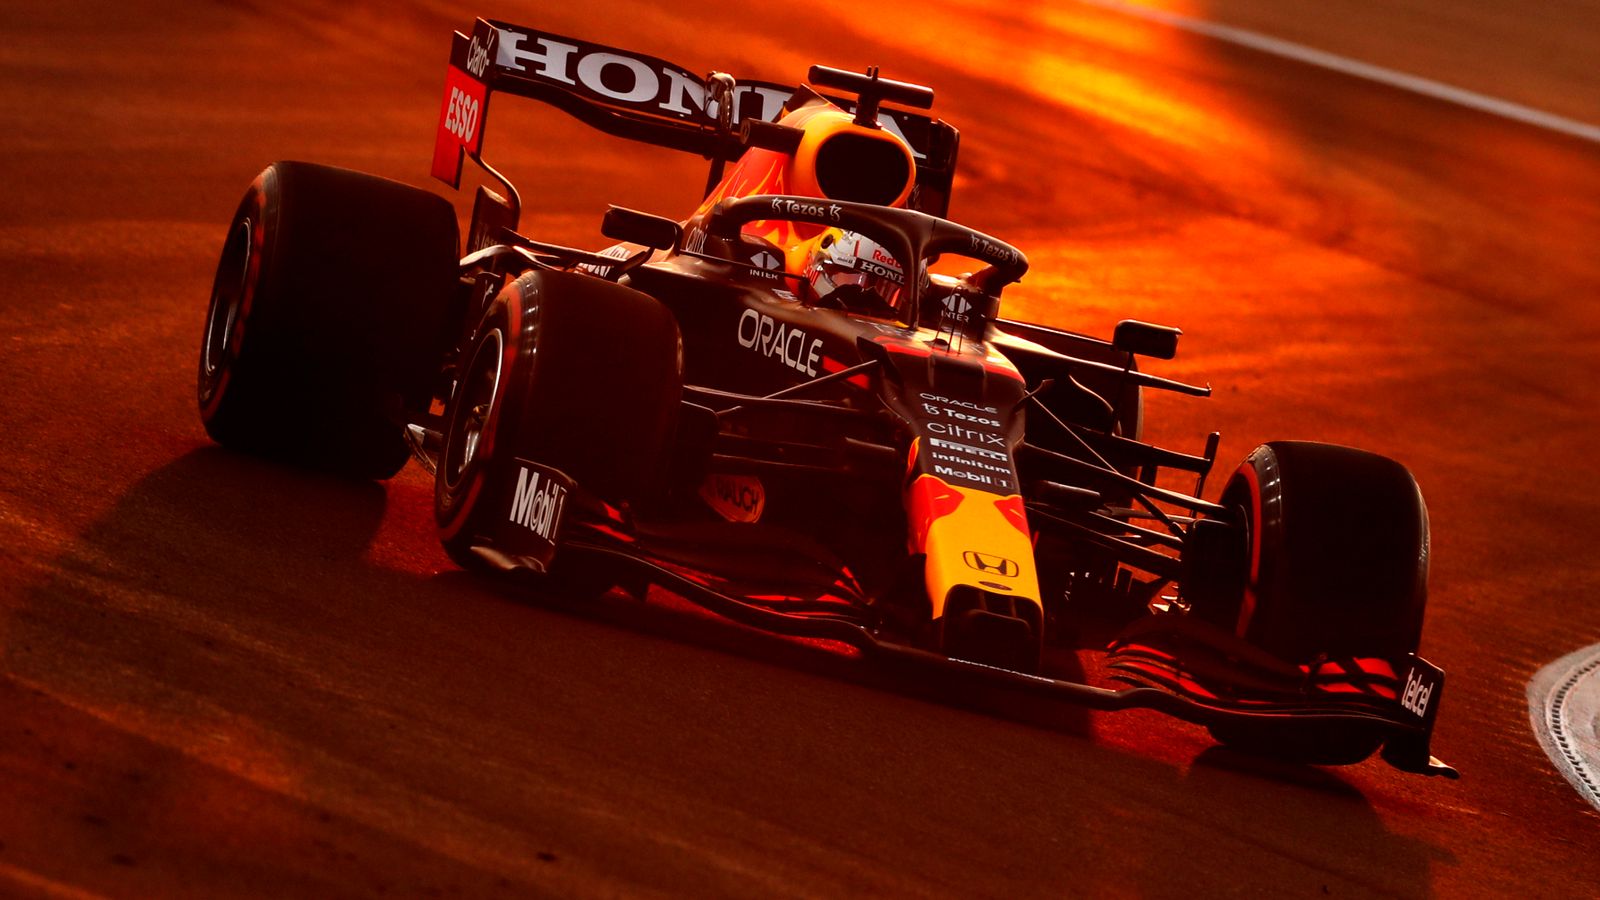 Saudi Arabian GP: Max Verstappen beats Lewis Hamilton in Practice Three ahead of big qualifying battle